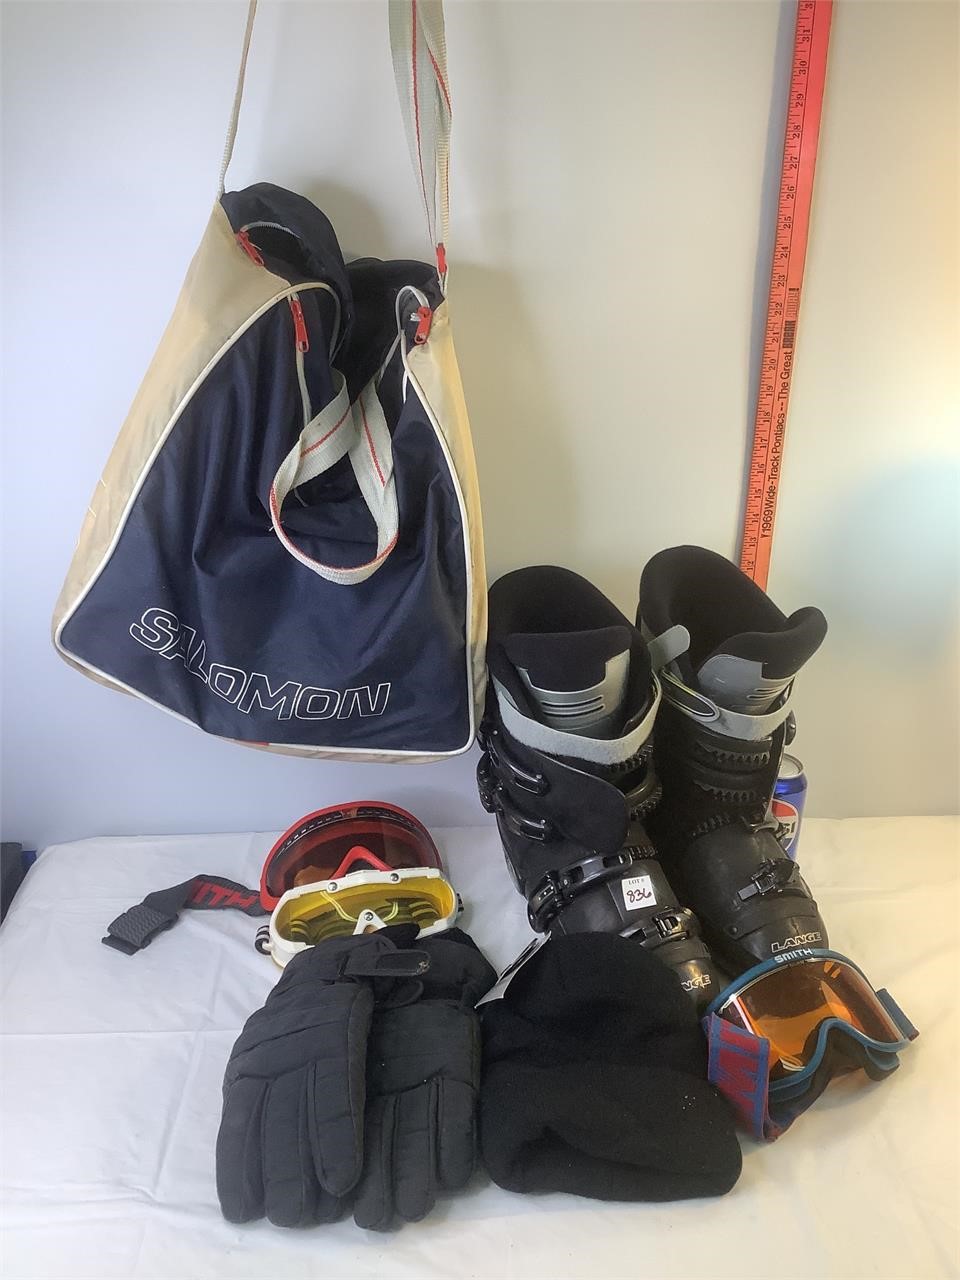 28-28.5 Ski Boots, Bag & Equipment